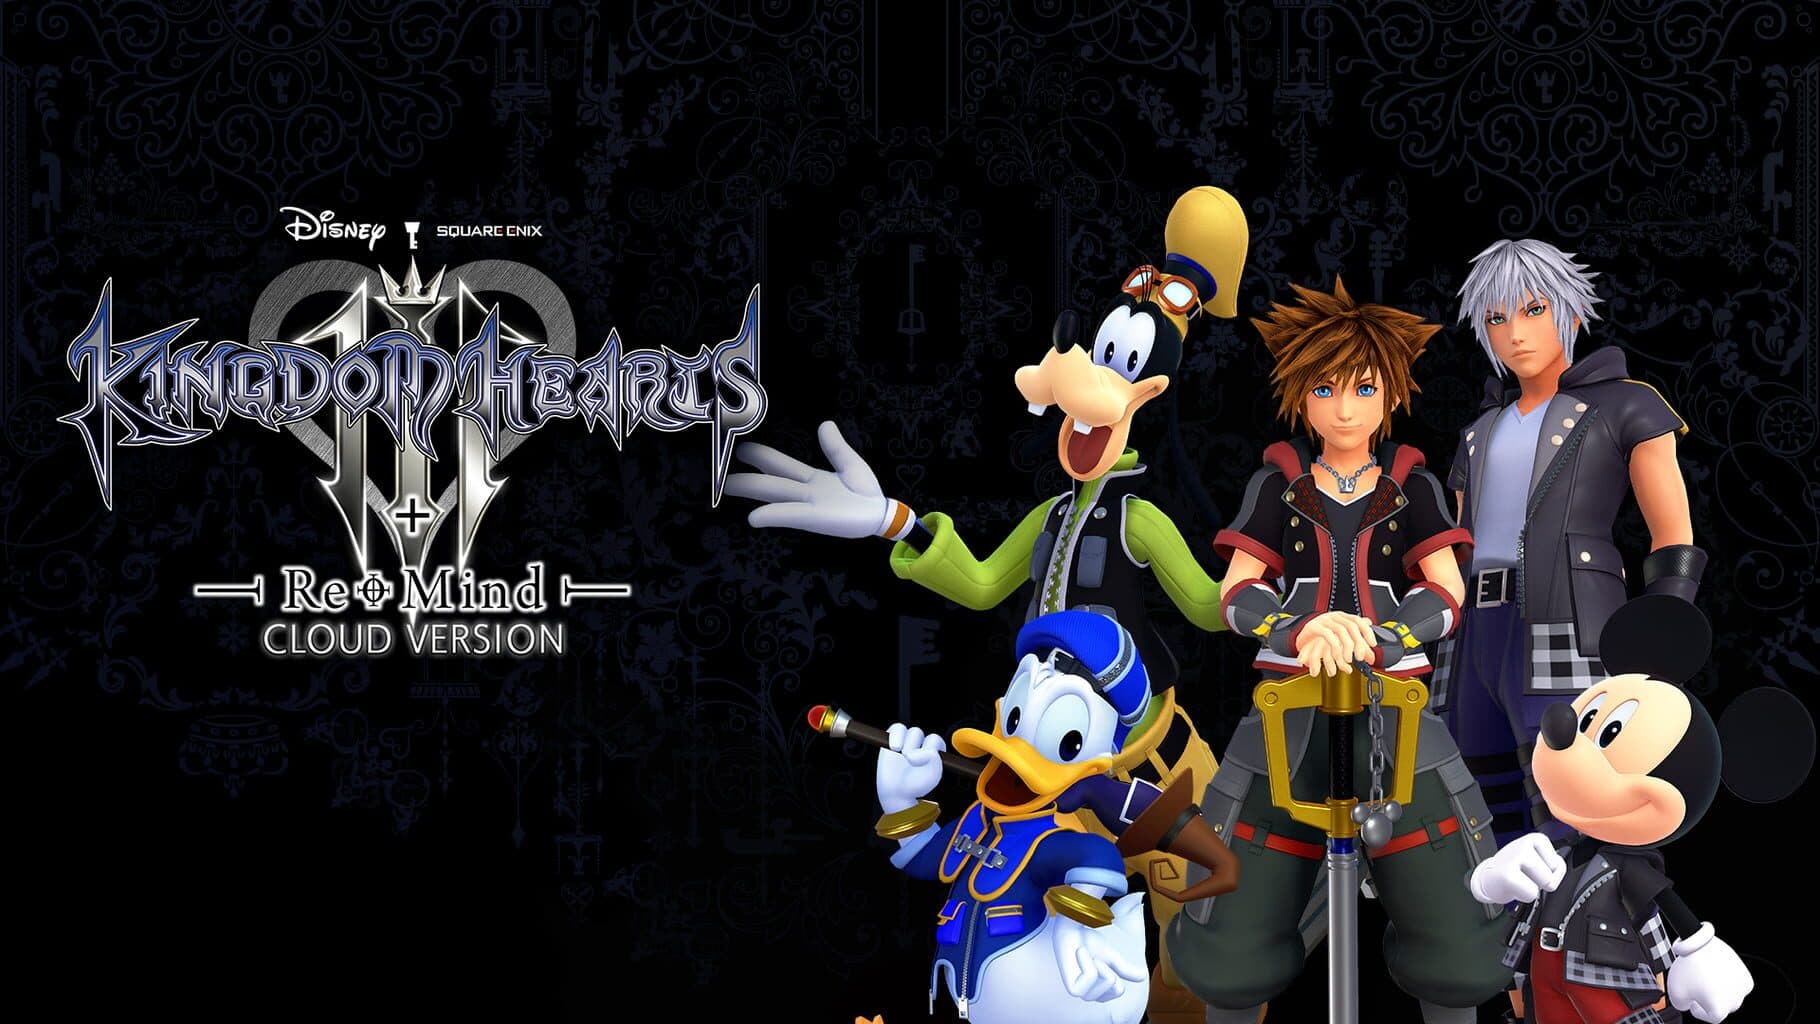 Kingdom Hearts III + Re Mind: Cloud Version Image